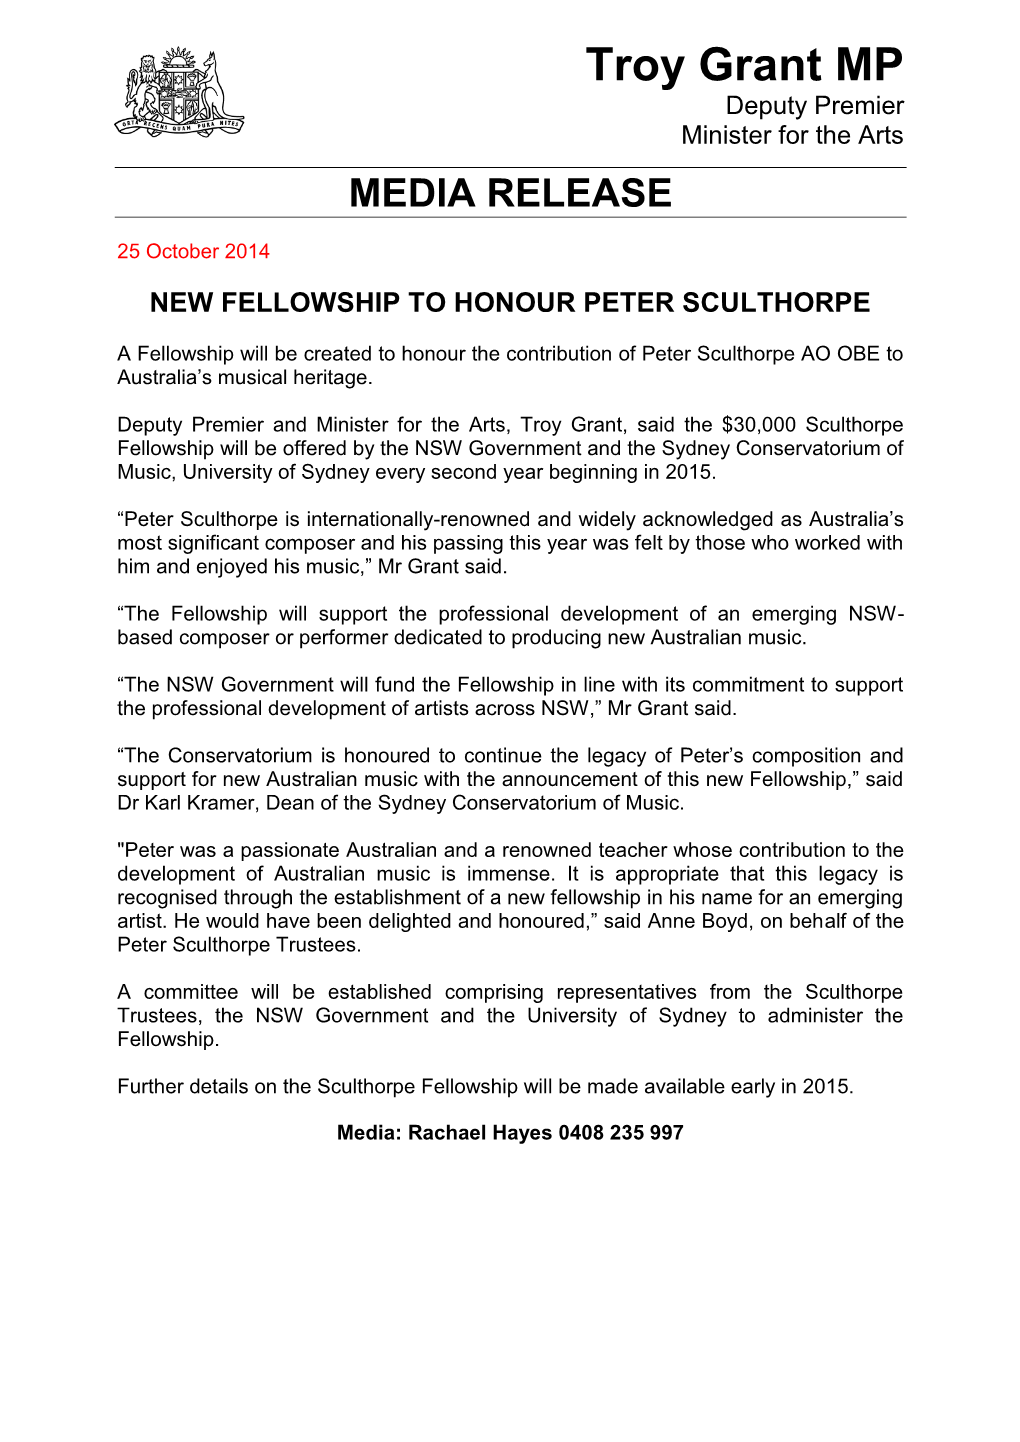 New Fellowship to Honour Peter Sculthorpe